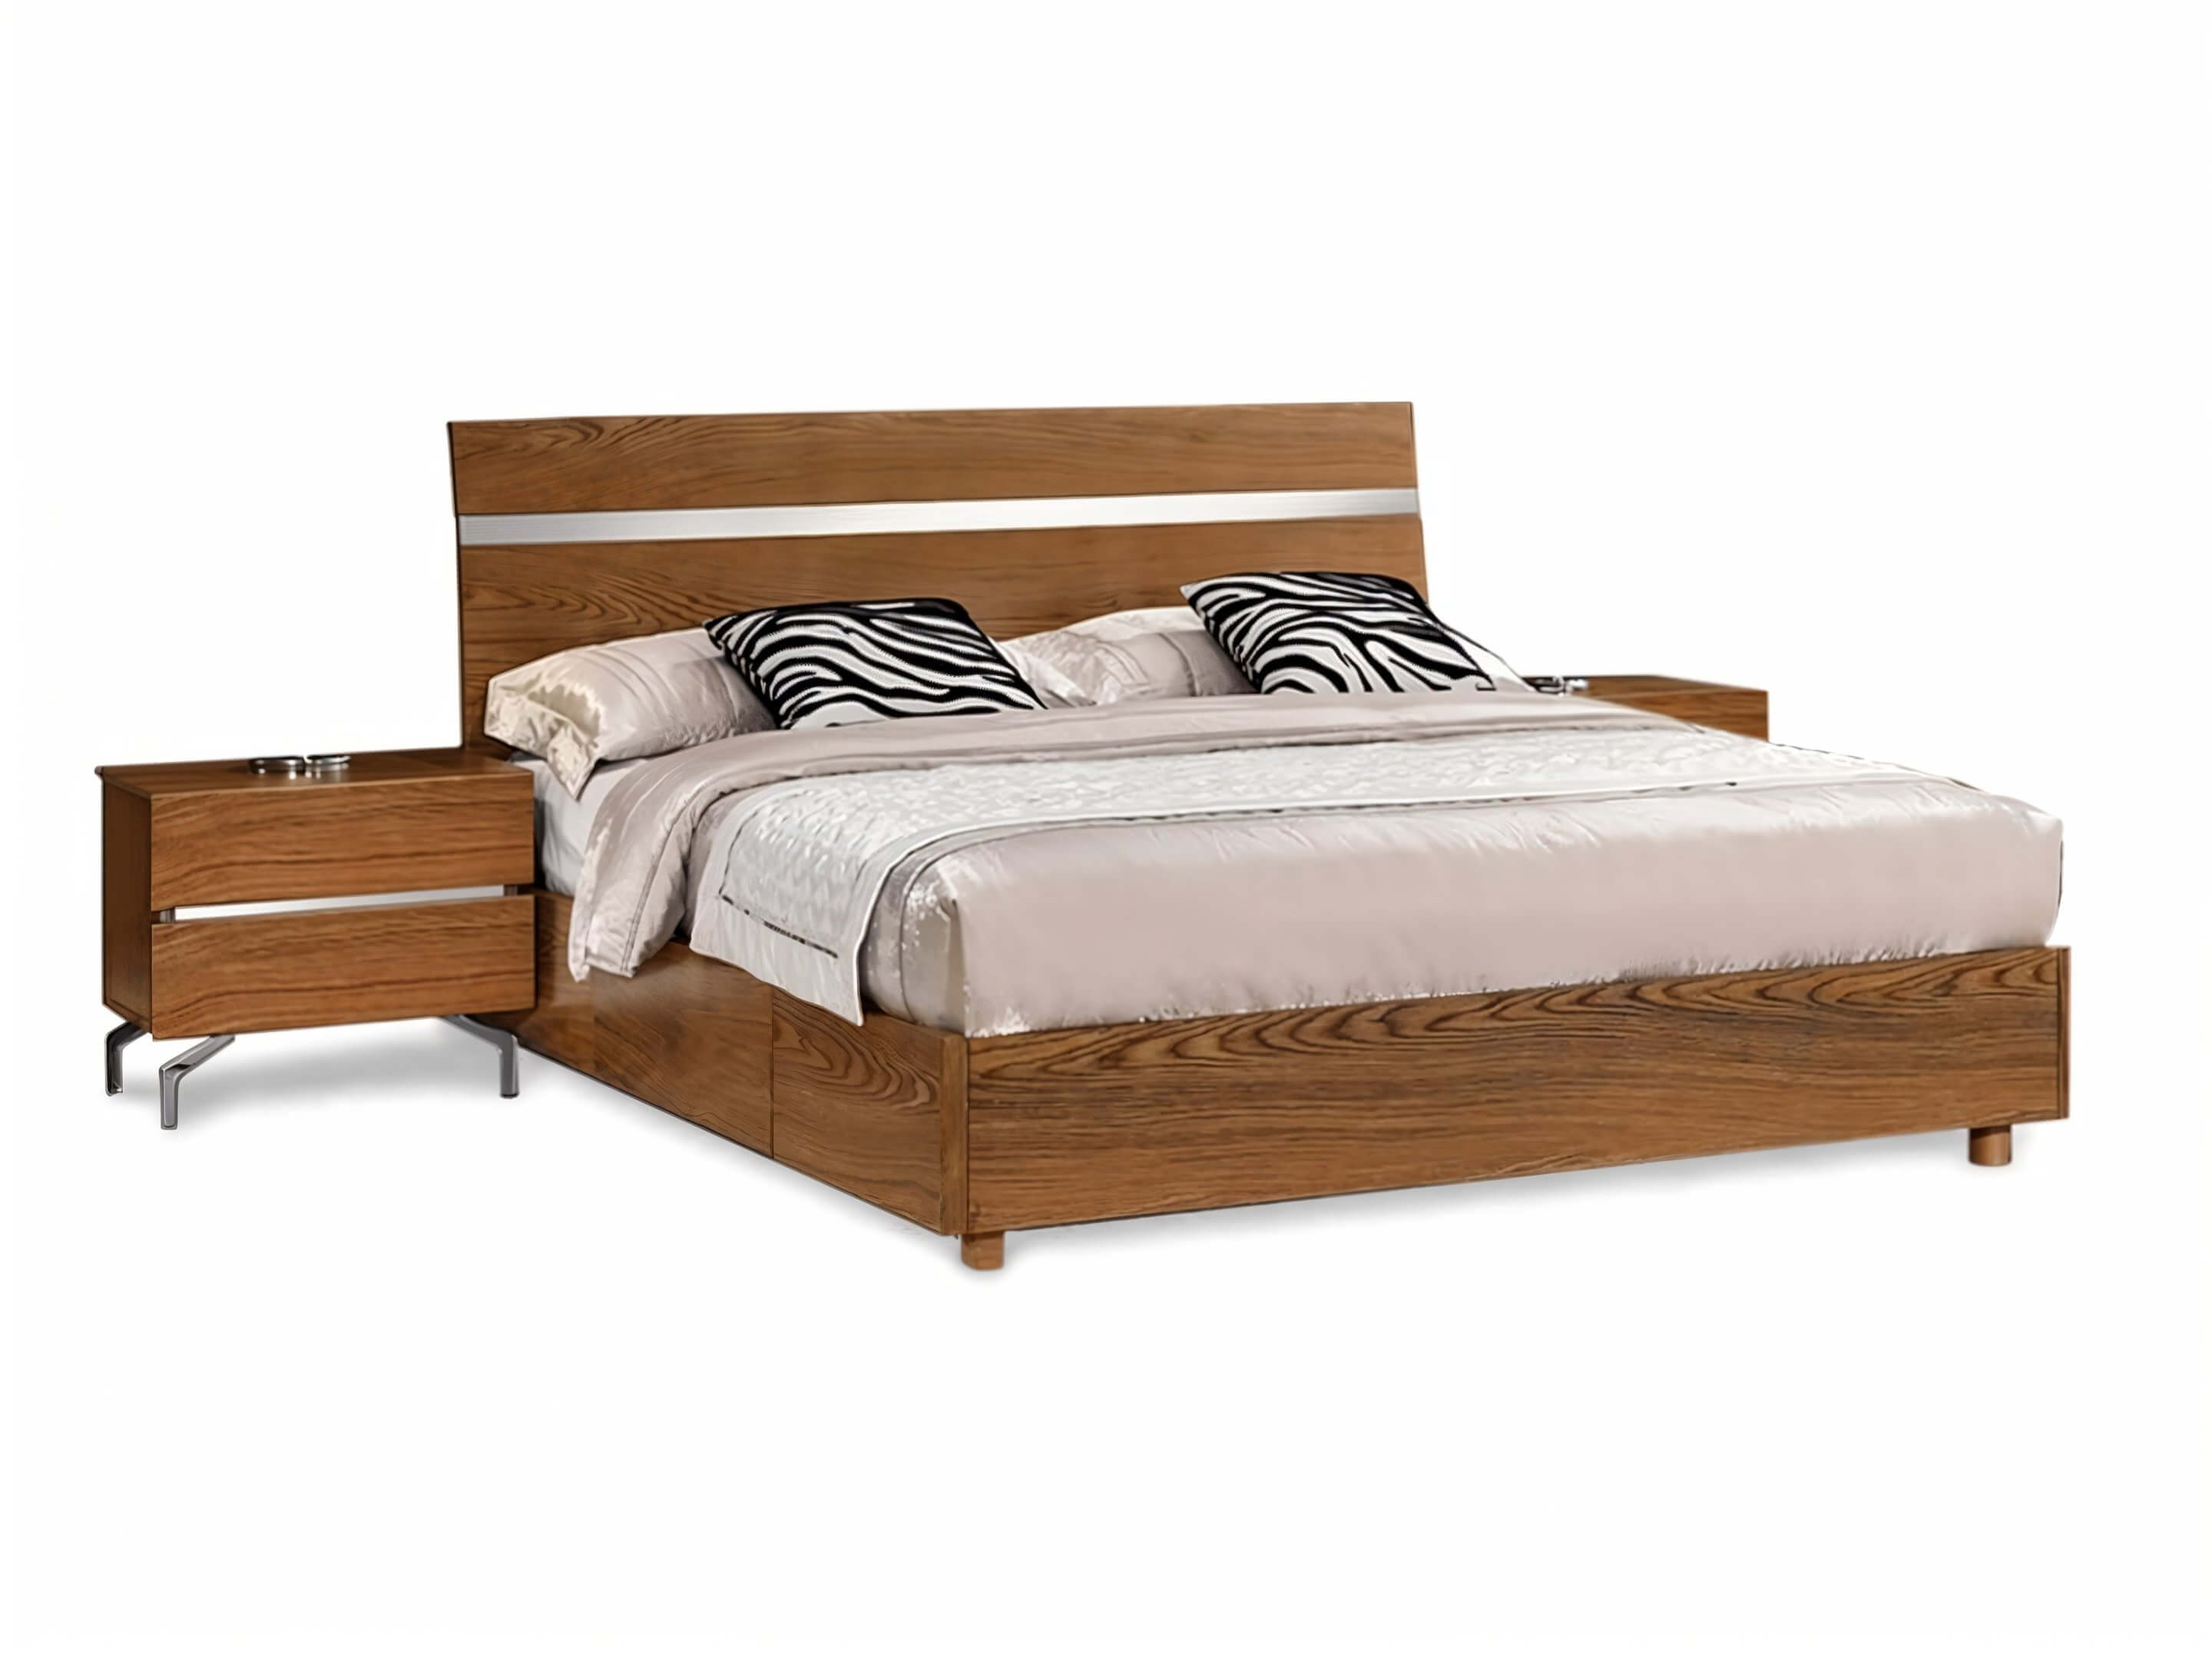 solid wood bedroom set queen size and 2 nightstands - Lux Furniture